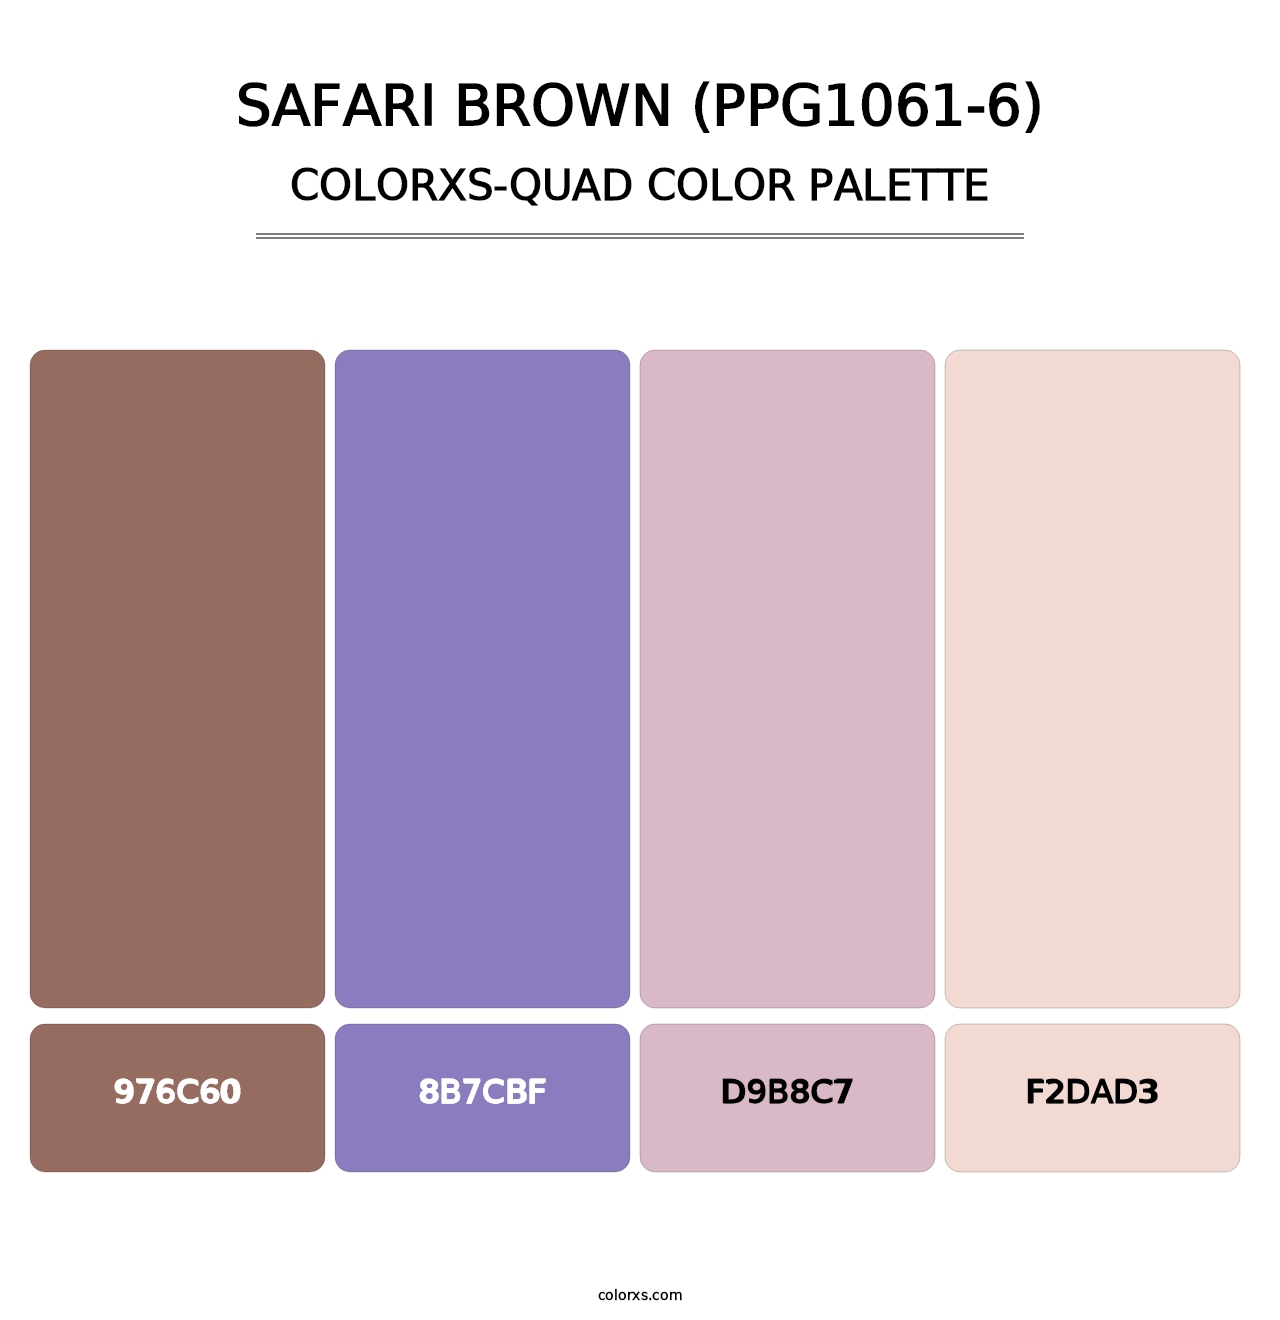 Safari Brown (PPG1061-6) - Colorxs Quad Palette